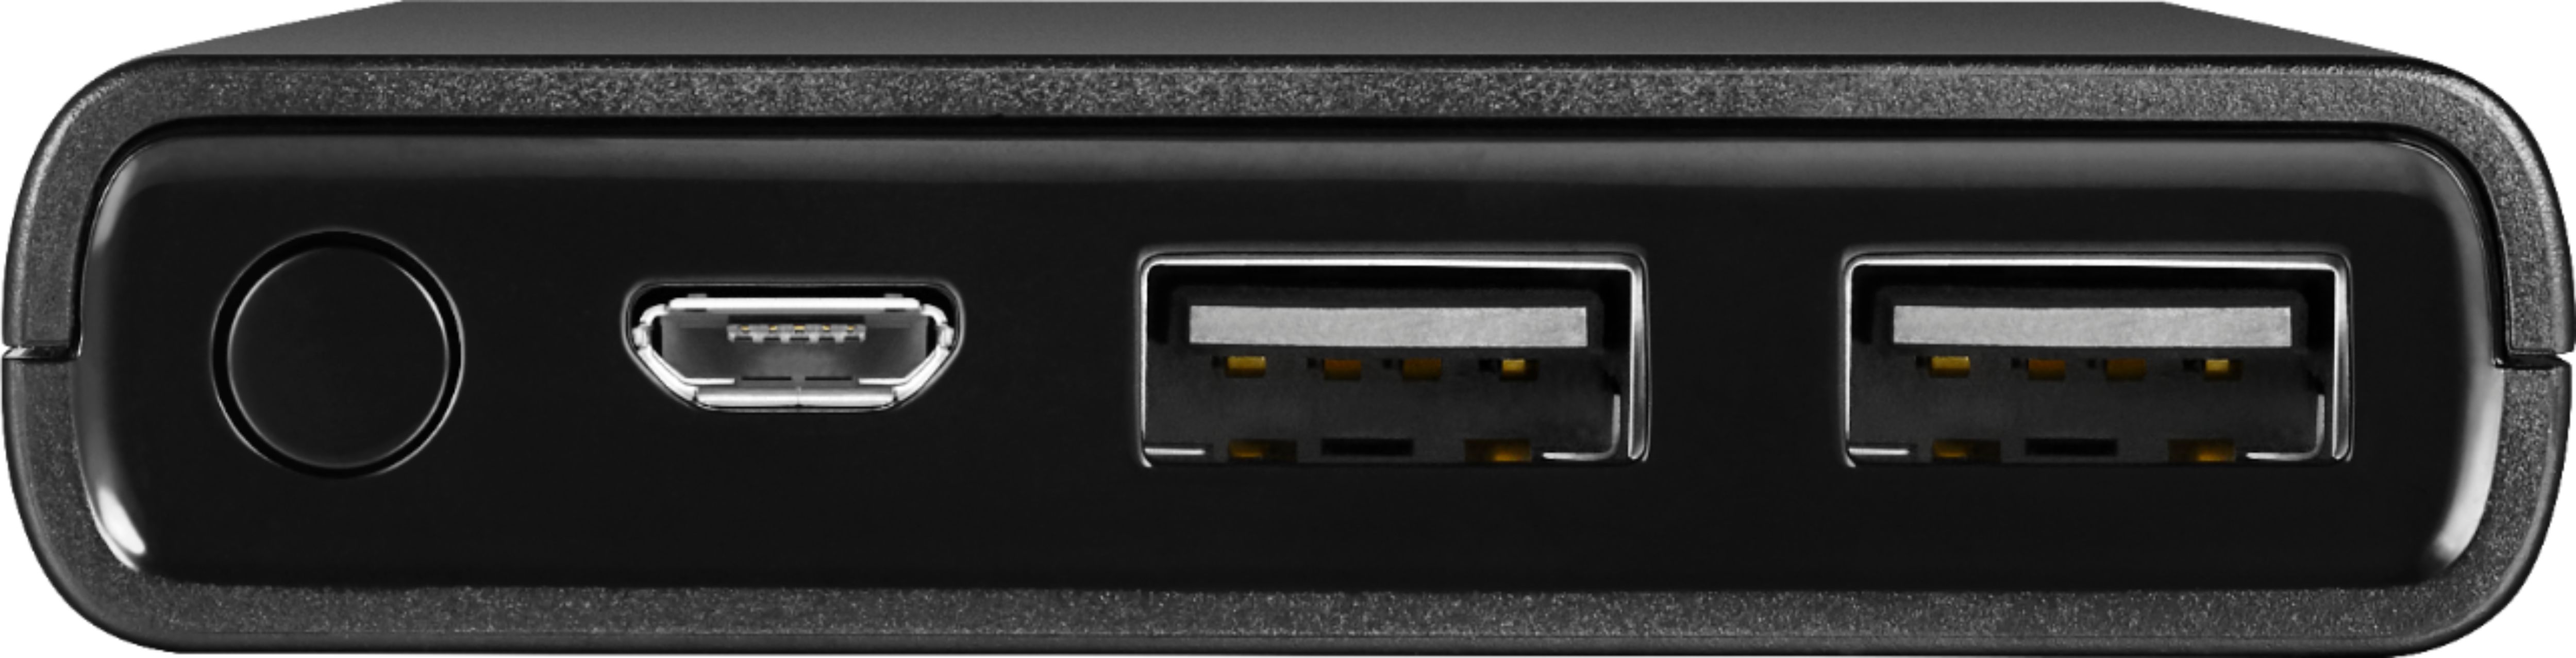 Multi-Port USB-C Adapter, Black Mobile Accessories - EE-P5000BBEGWW